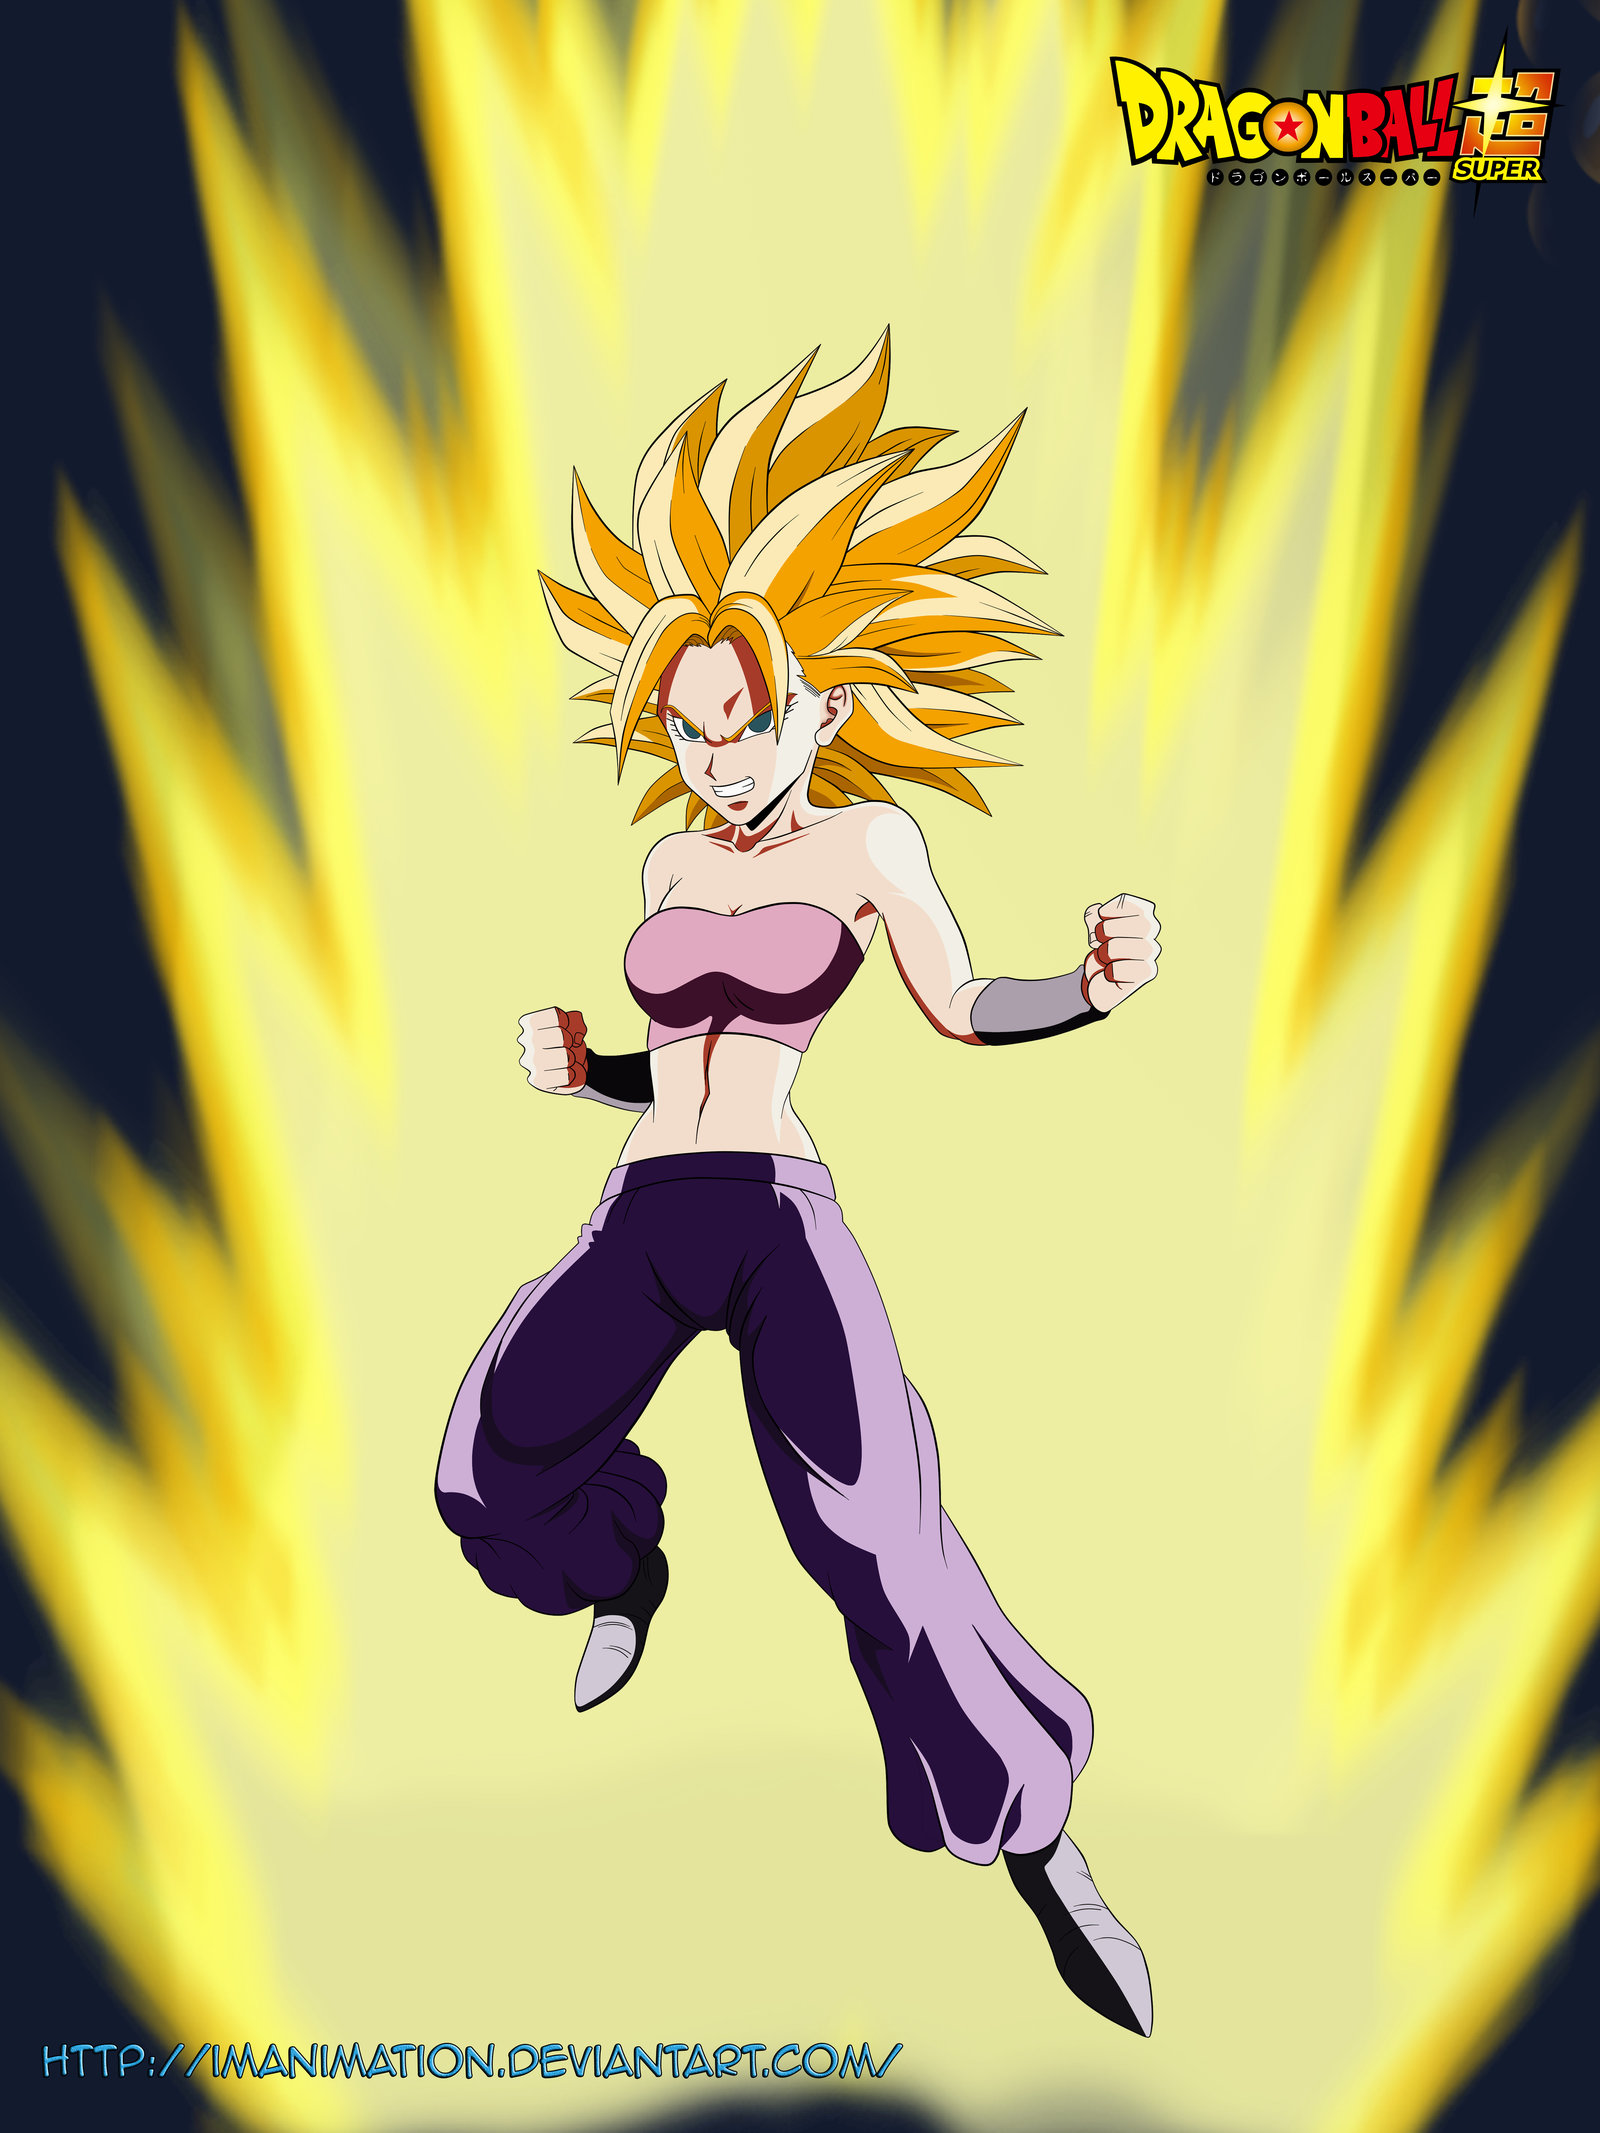 Super Saiyan 2 Goku Version 2 by BrusselTheSaiyan on DeviantArt